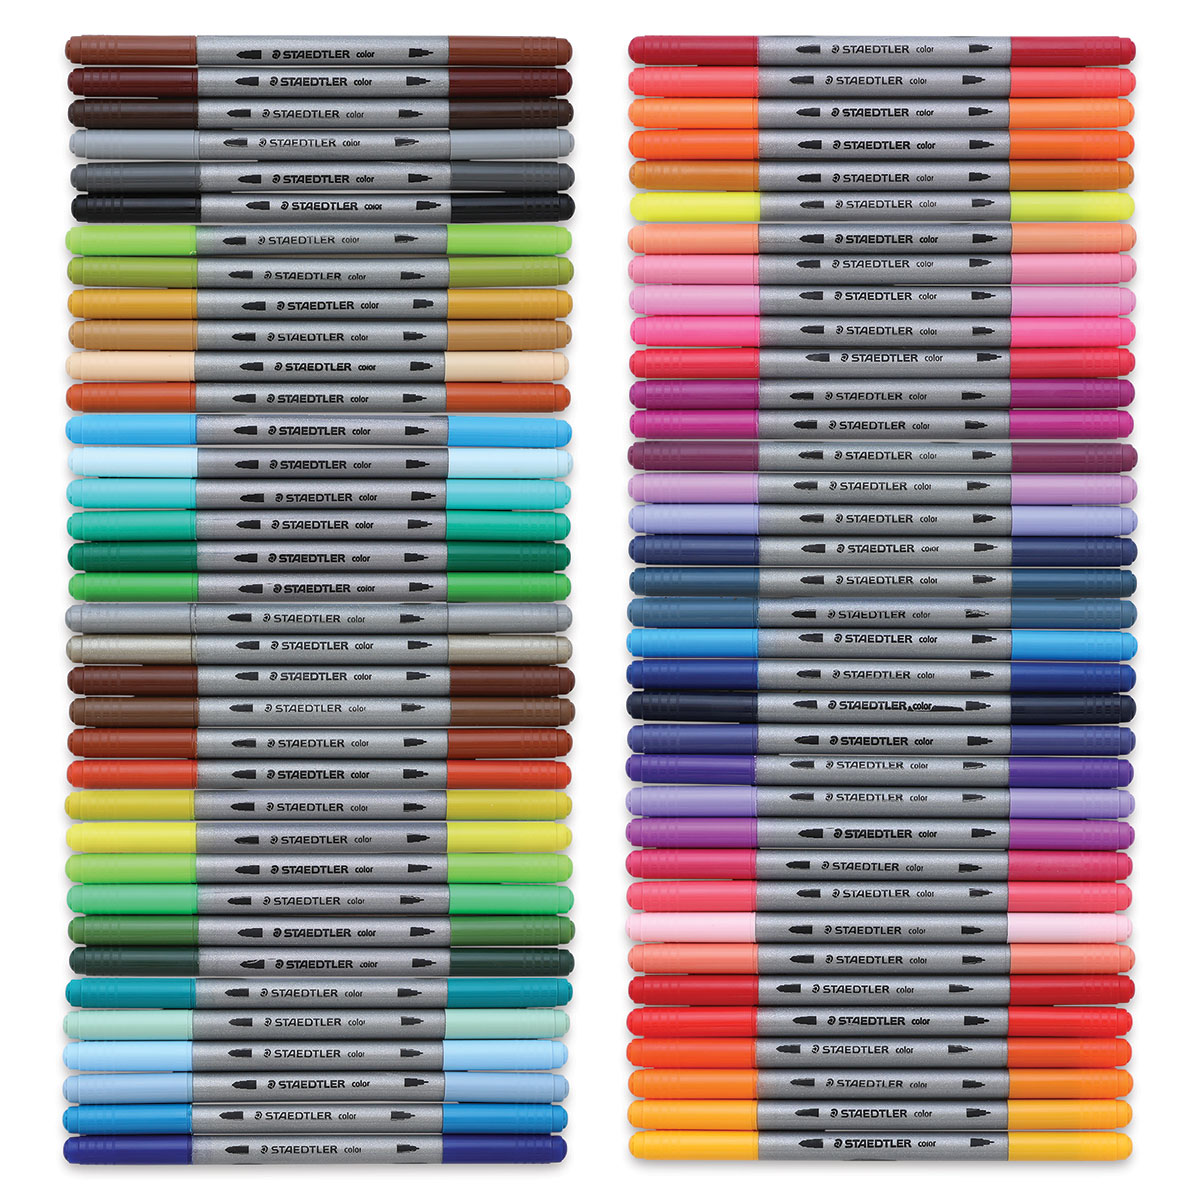 STAEDTLER Fiber Markers Twin Tip Assorted Colors 72/Pack (320TB72 LU) 3200